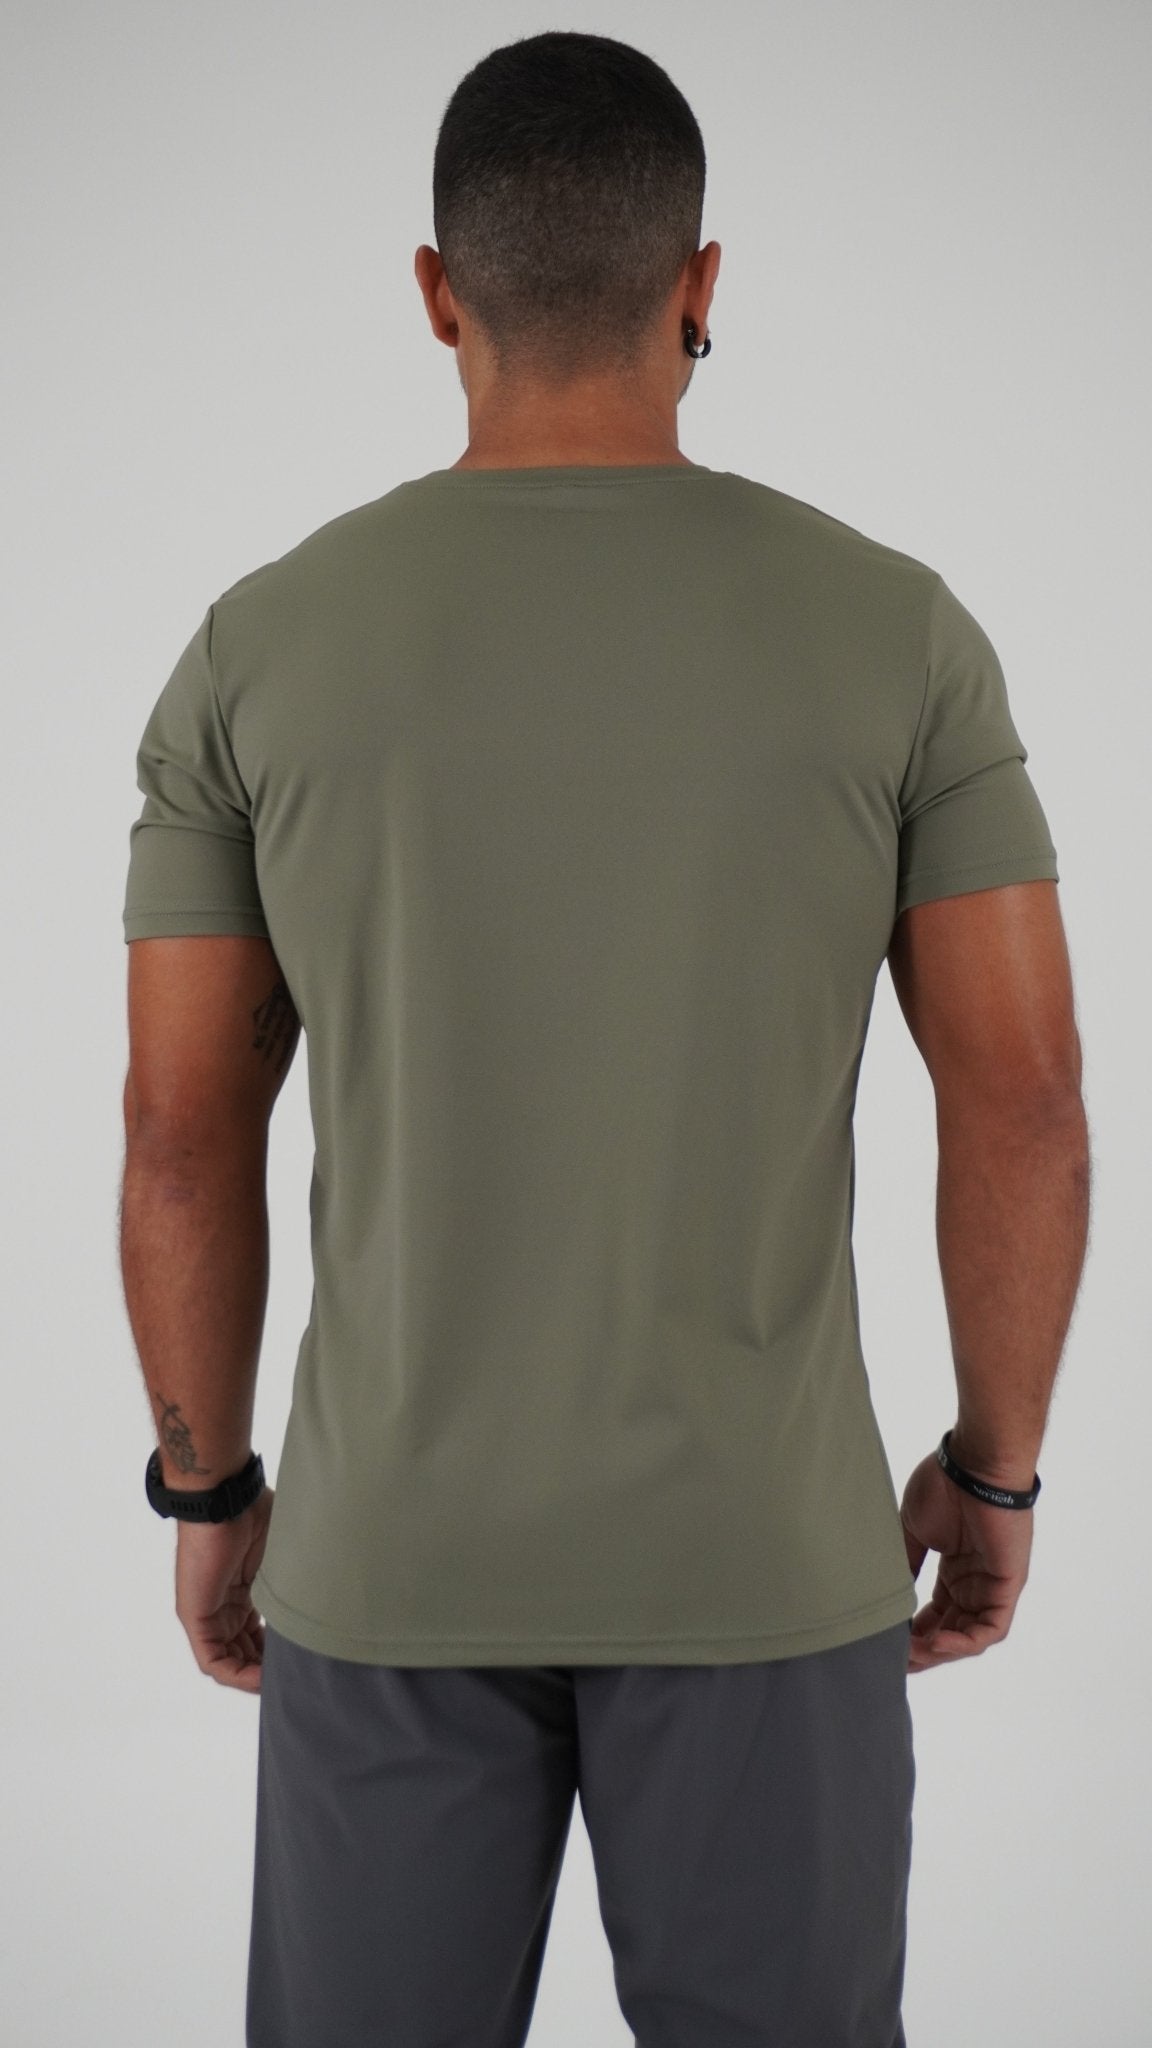 RESILIENT Prime Fit Shirt - Resilient Active